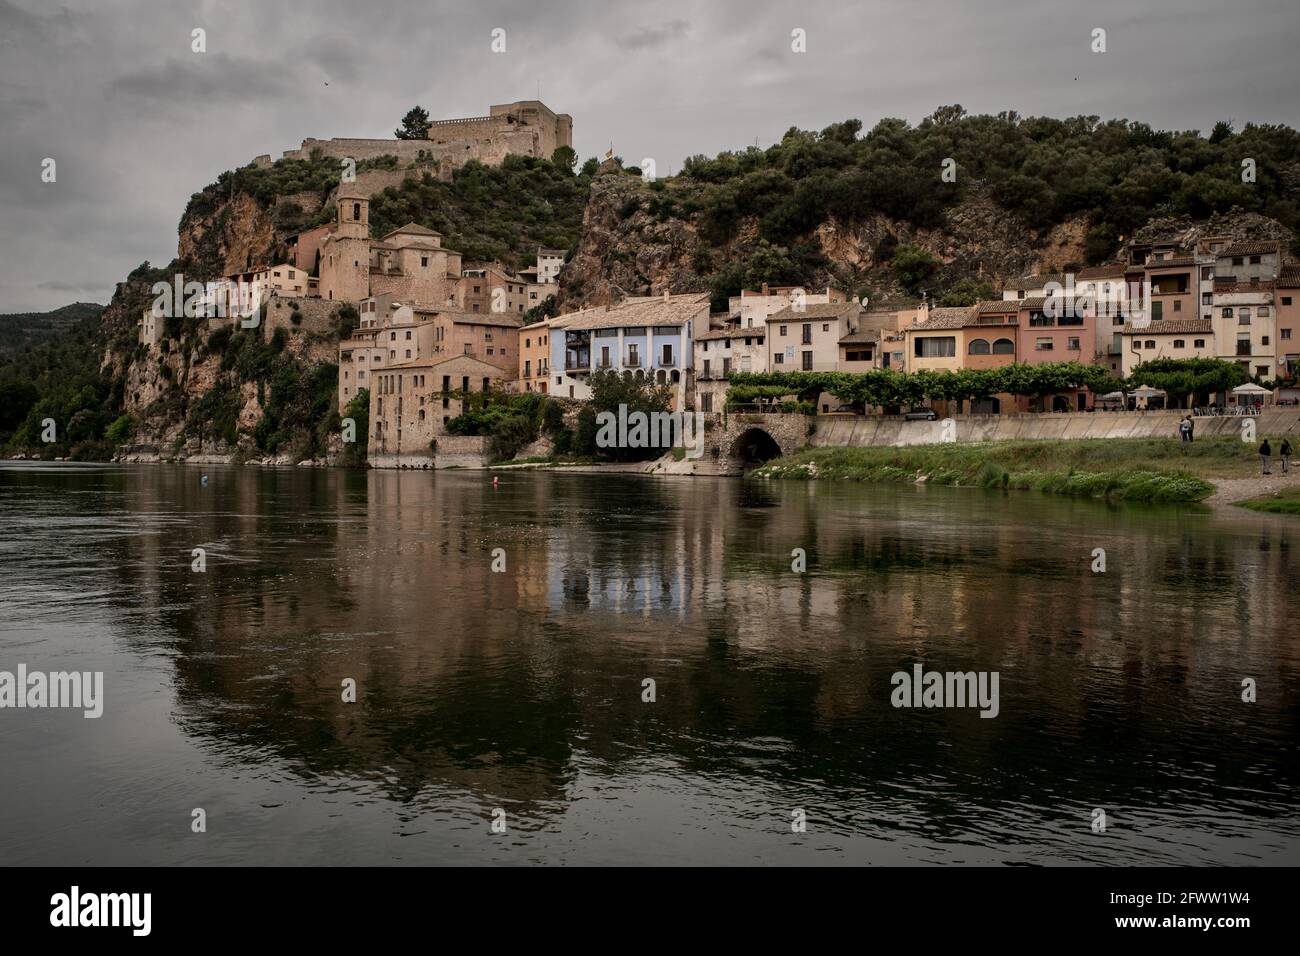 Miravet village at the banks of the Ebro river in Tarragona province, Catalonia, Spain. Stock Photo